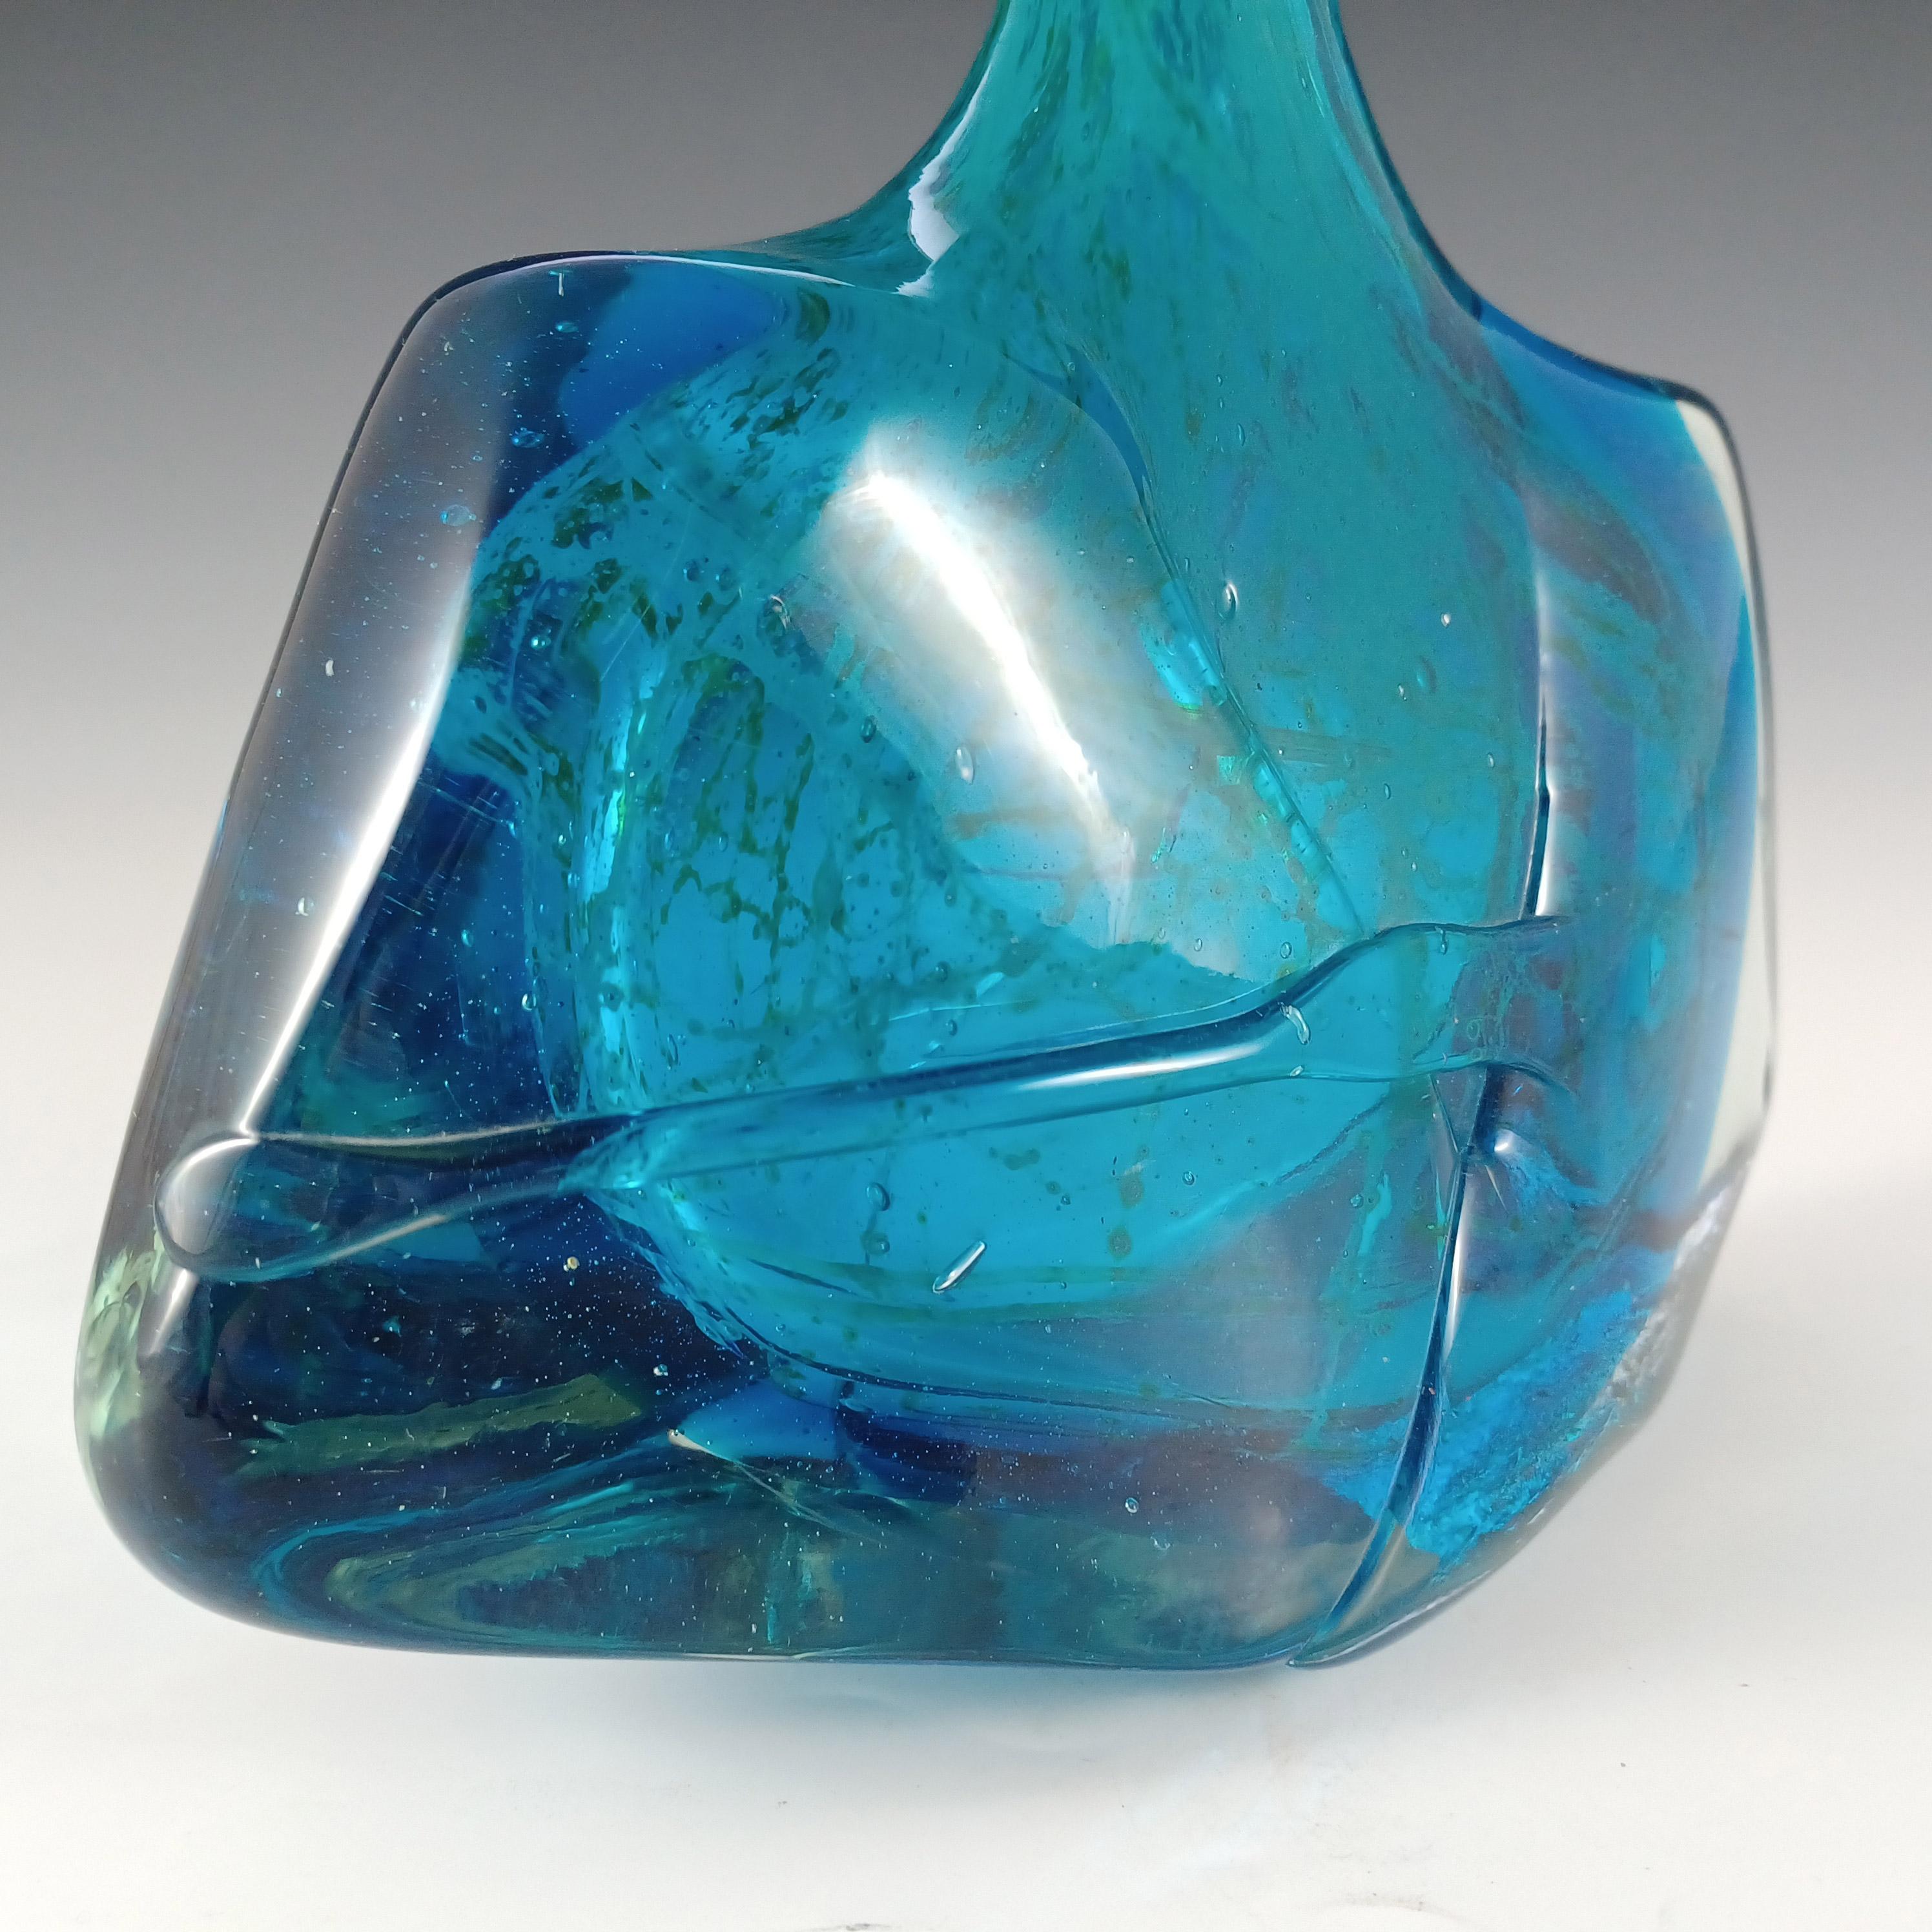 Mdina Maltese Blue Glass 'Fish' / 'Axe Head' Vase - Signed 1979 For Sale 1